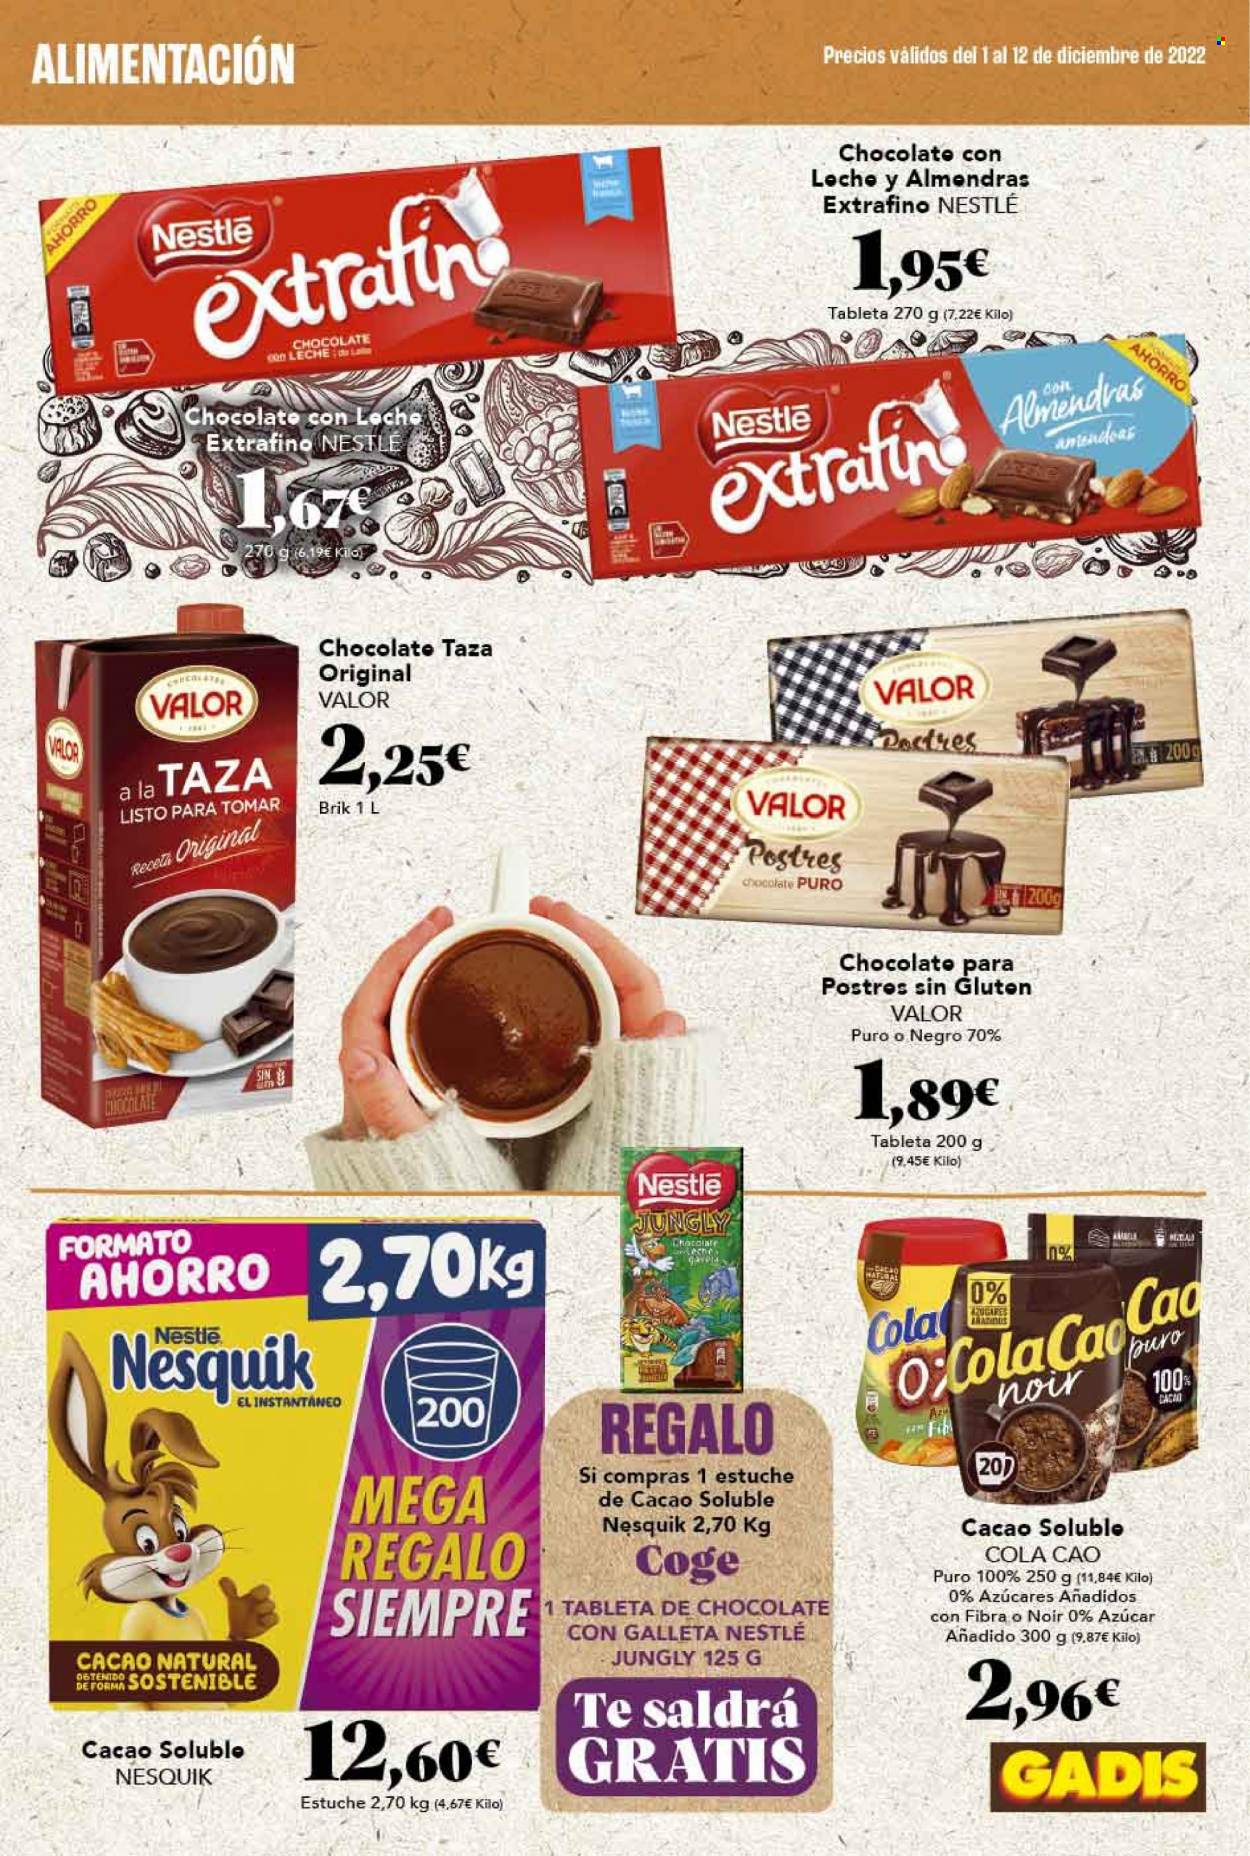 thumbnail - Folleto actual Gadis - 01/12/22 - 12/12/22 - Ventas - Nestlé, Nesquik, Cola Cao, chocolate a la taza. Página 25.